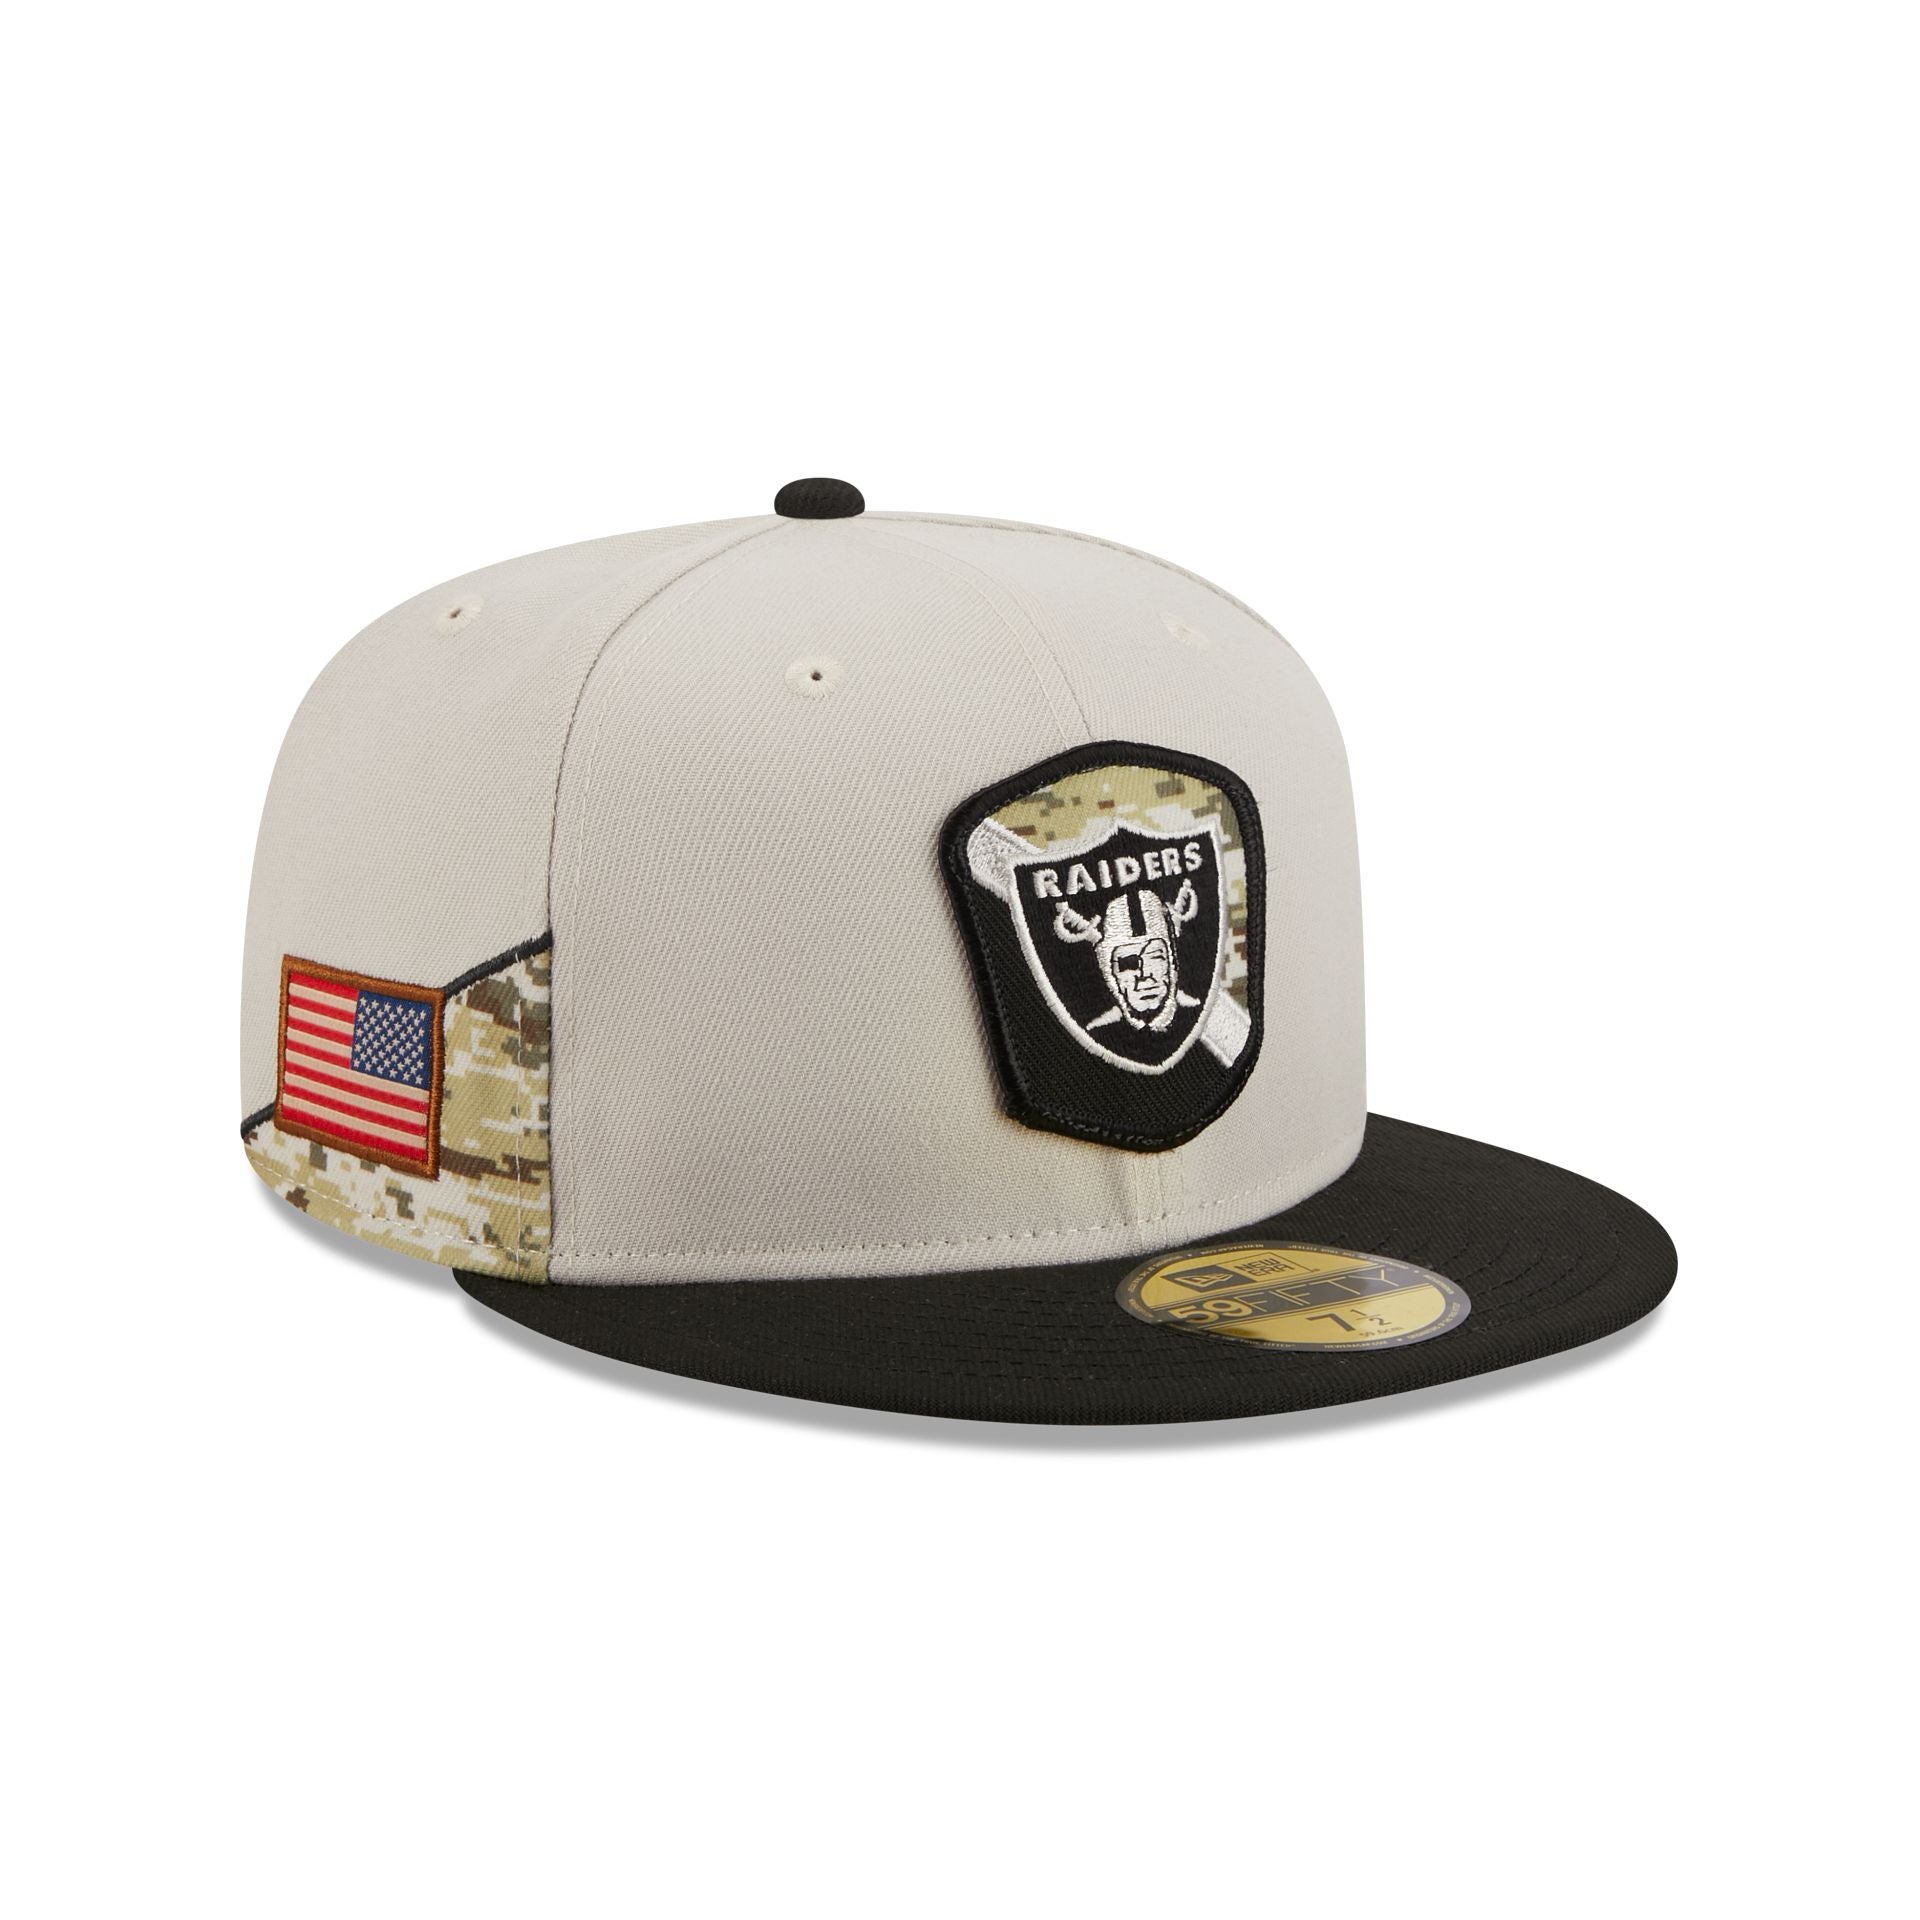 Official Las Vegas Raiders New Era Hats, New Era Raiders Beanies